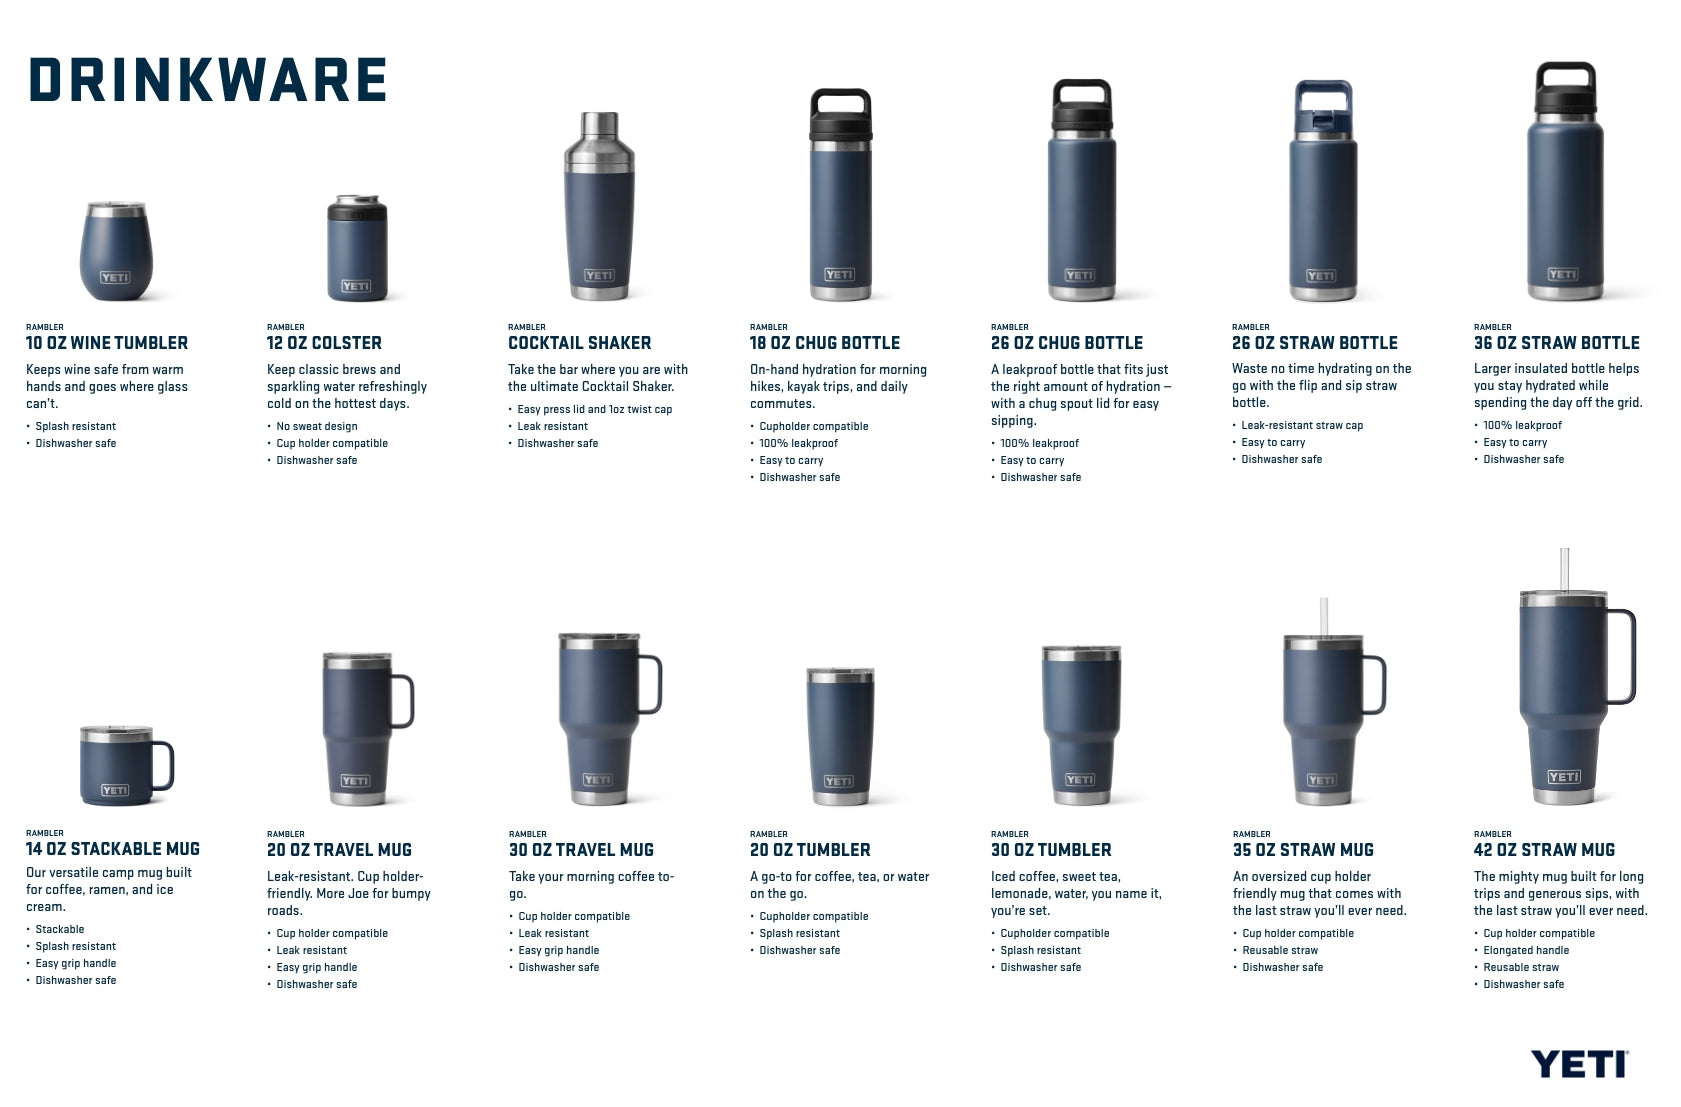 YETI drinkware size guide